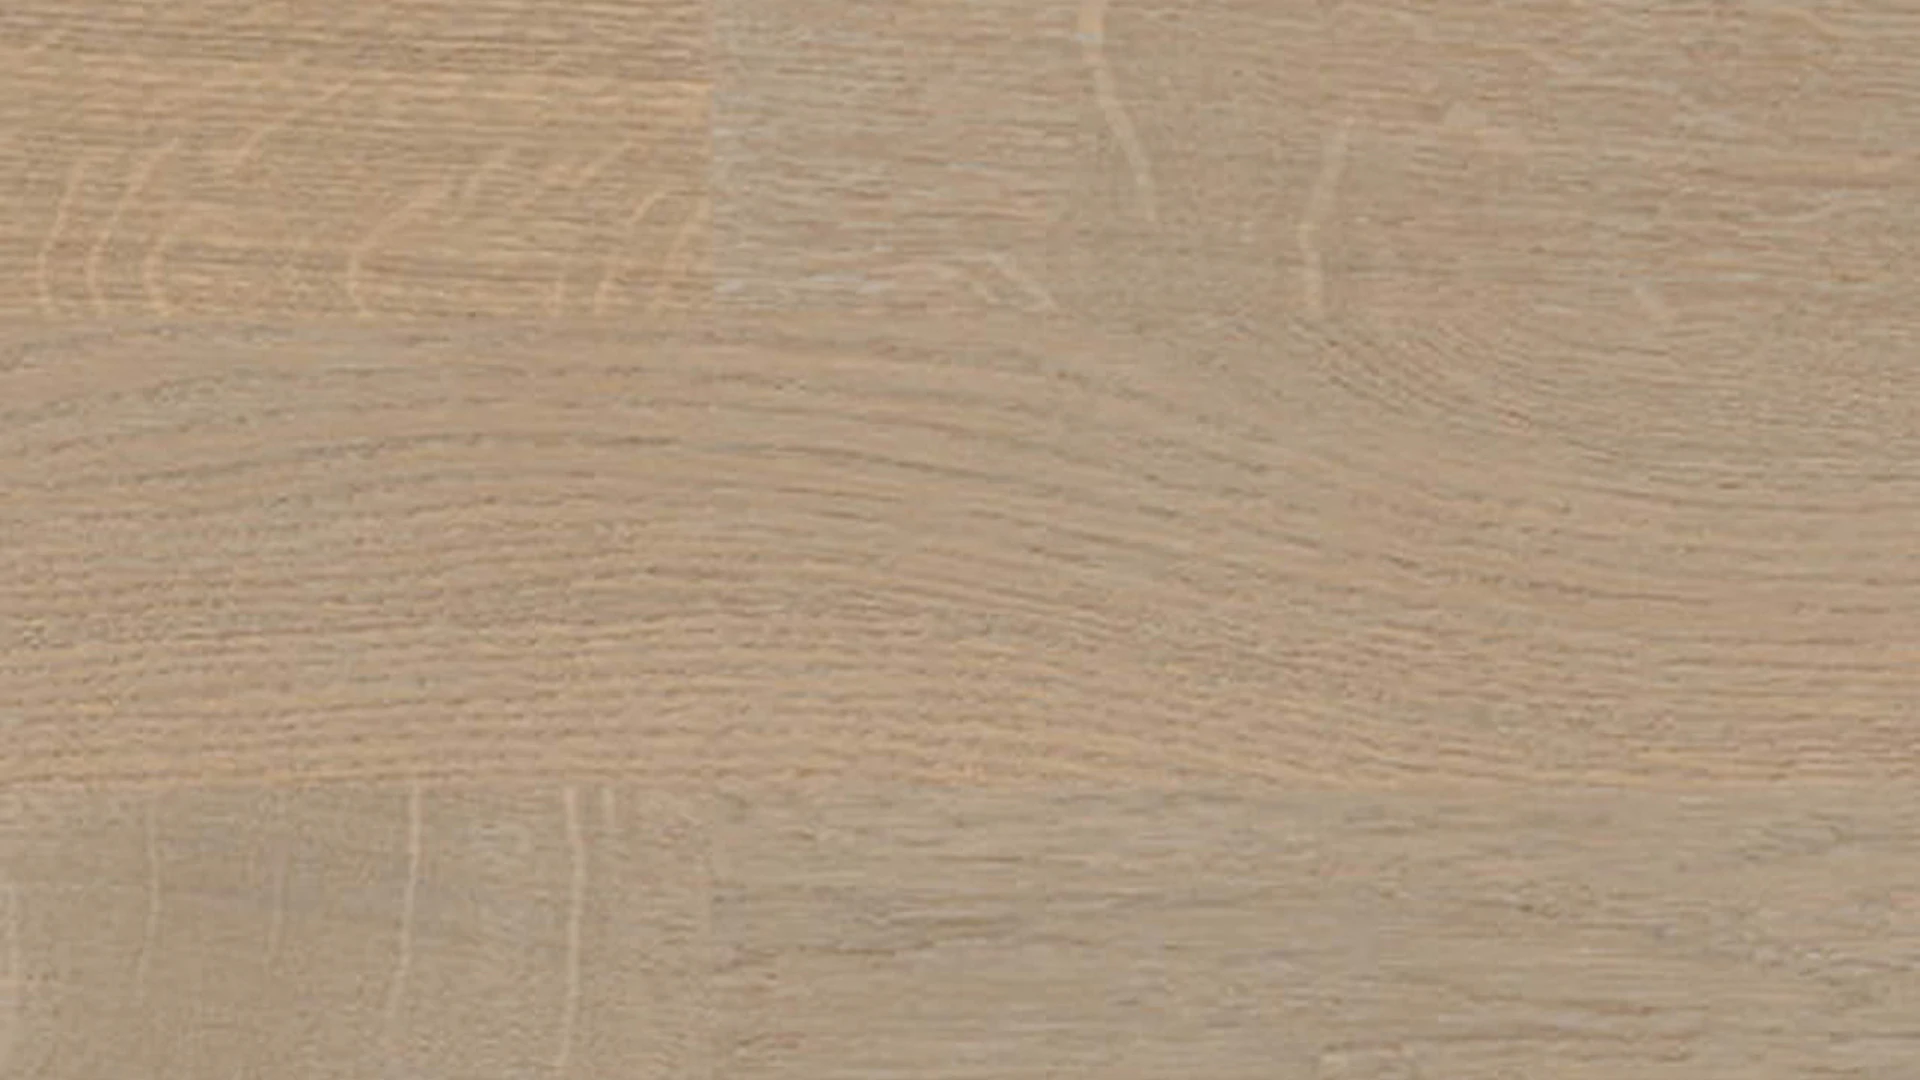 Haro Parquet Flooring - Series 4000 Stab Allegro naturaDur Oak sand gray Trend (540135)